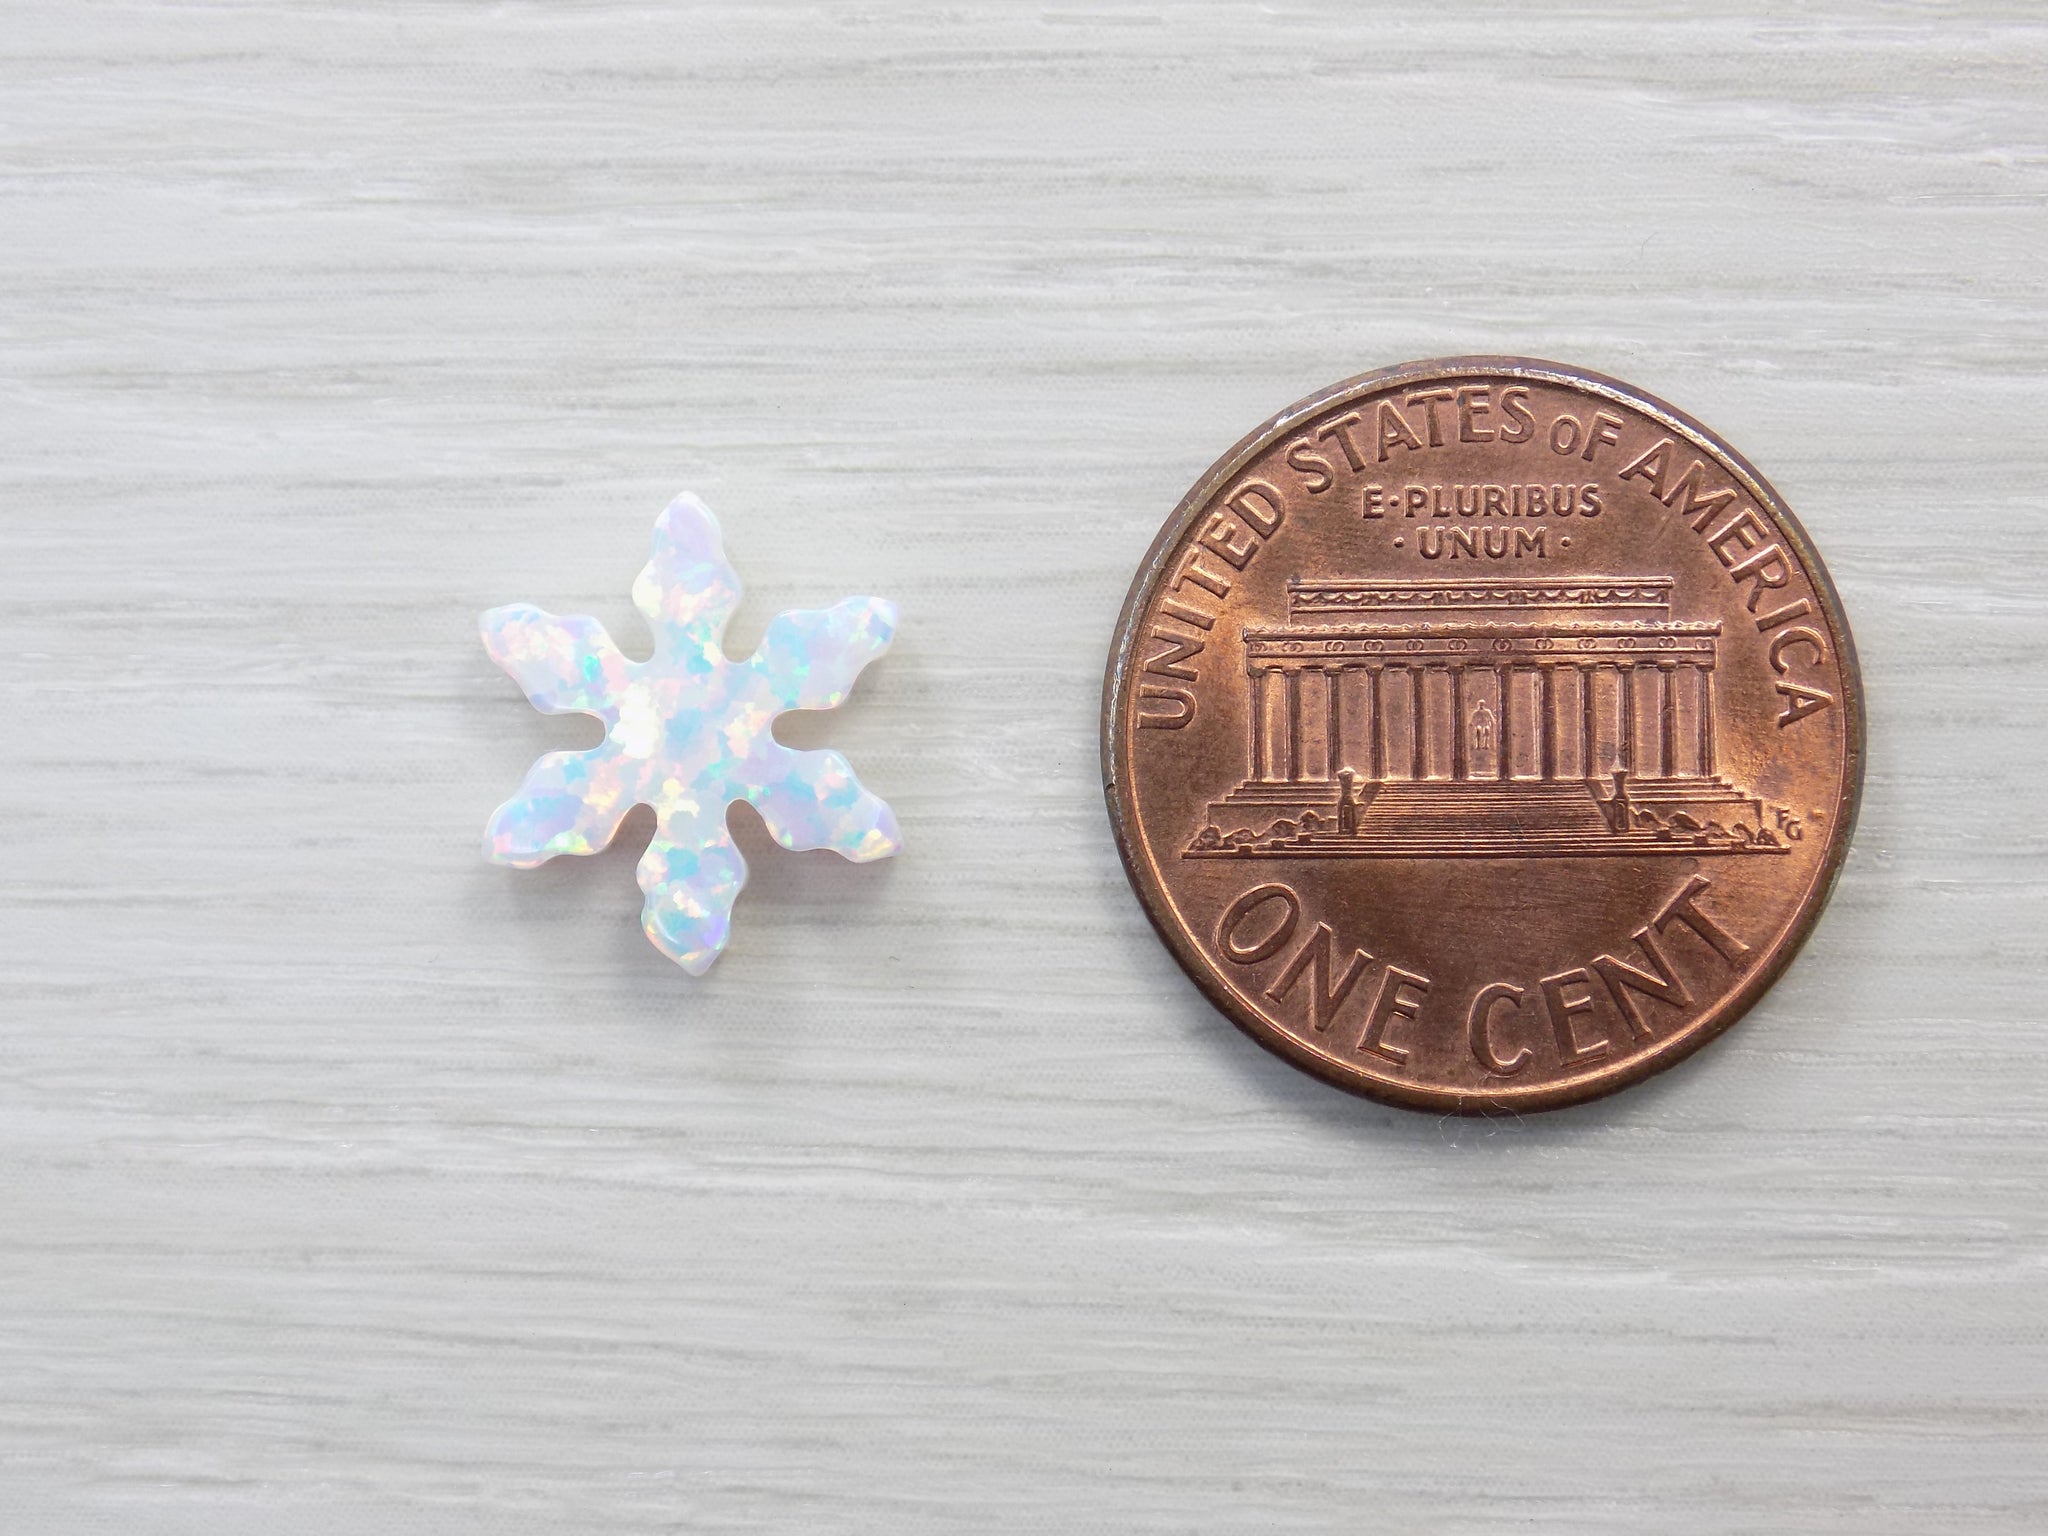 Snowflake Charm, Opals Snowflakes Beads, White Opal Lab Created Pendan